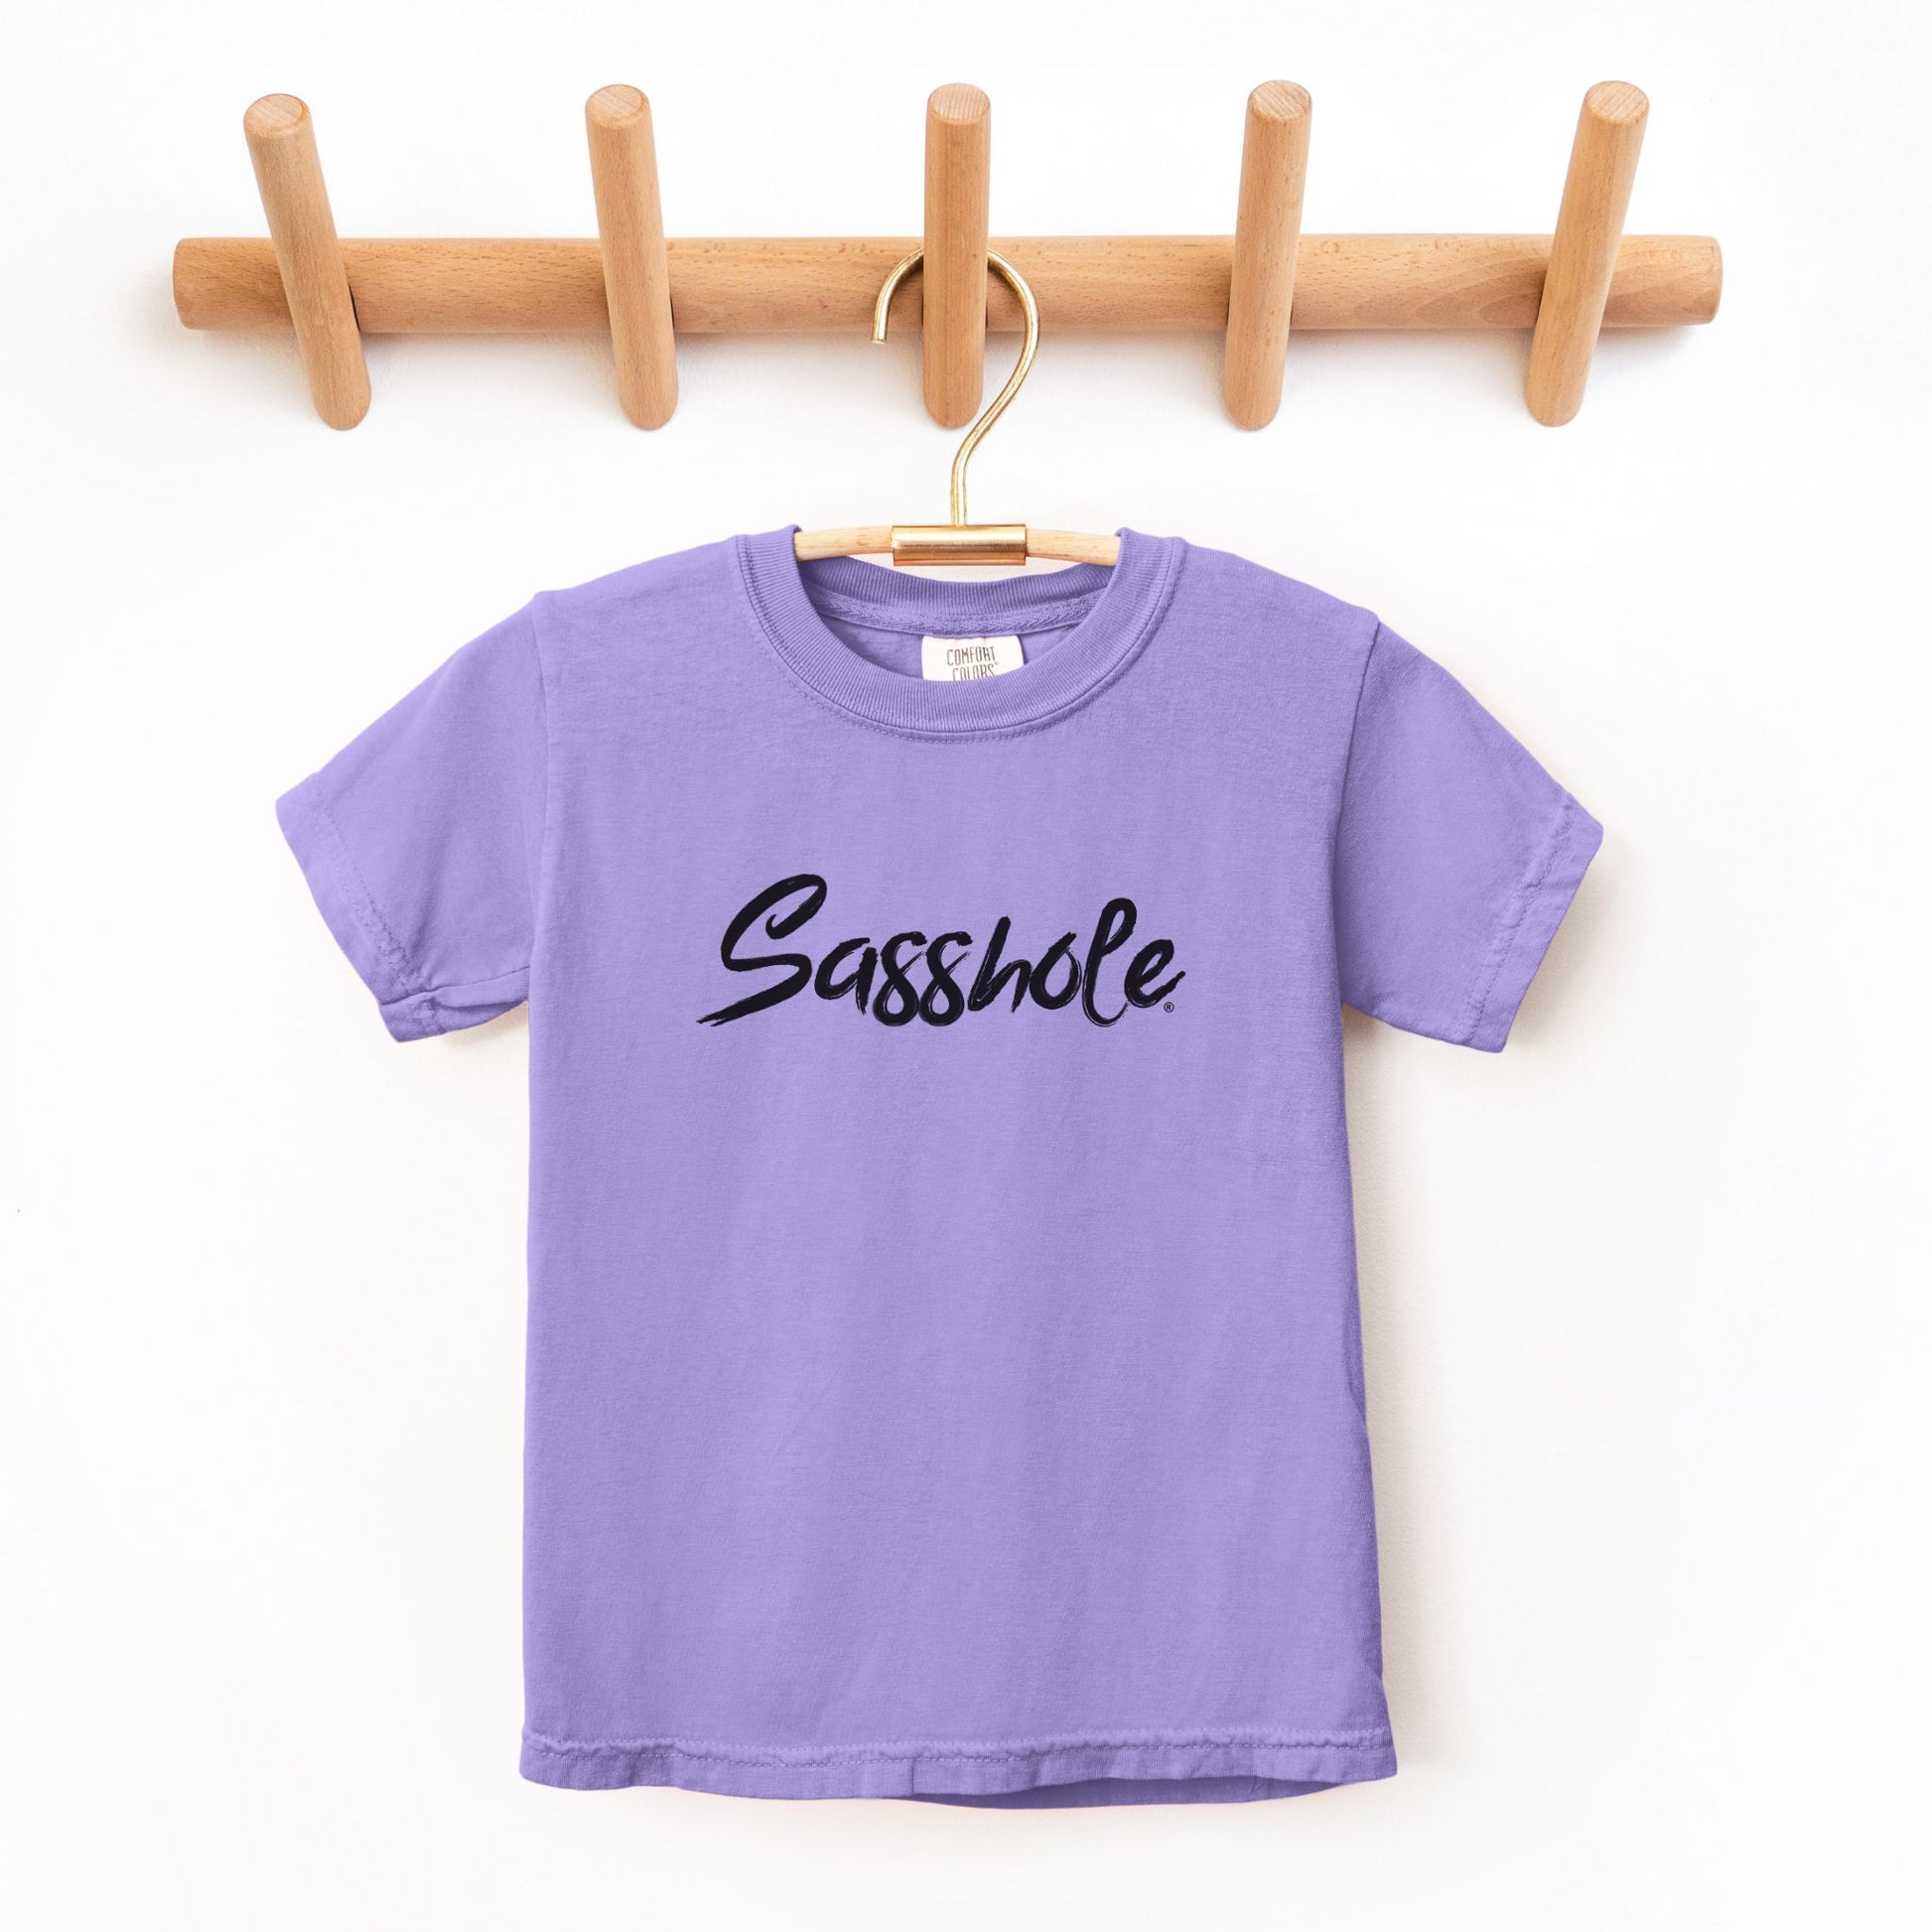 sasshole girls cute shirts